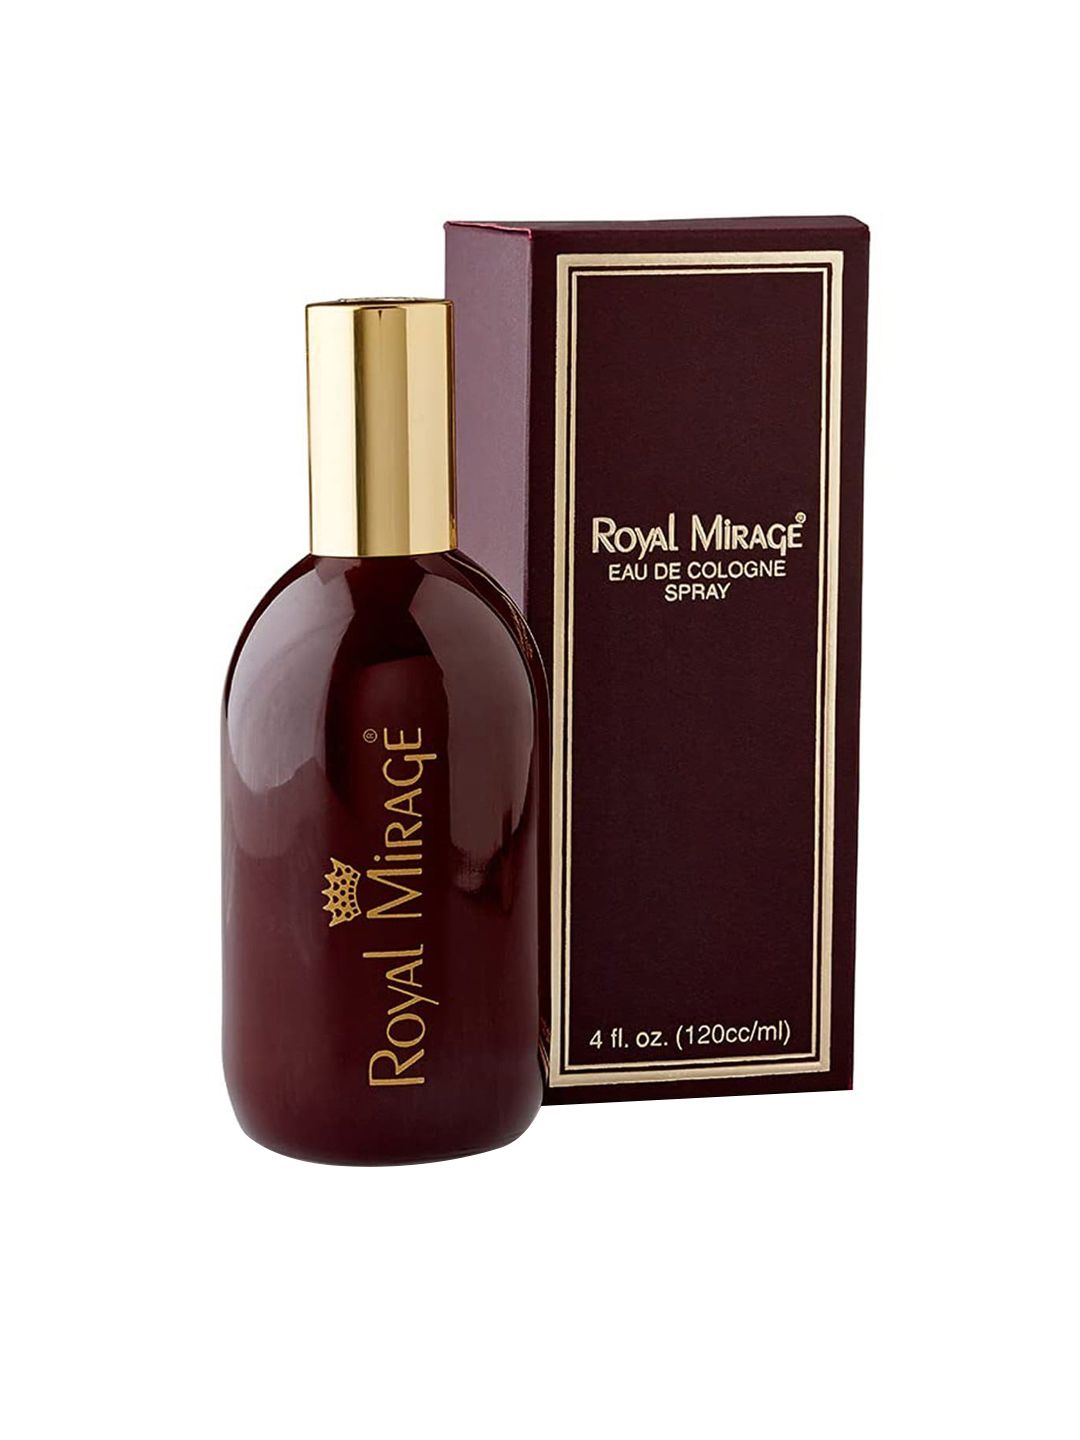 Royal Mirage Classic Original Eau De Cologne Perfume 120 ml Price in India